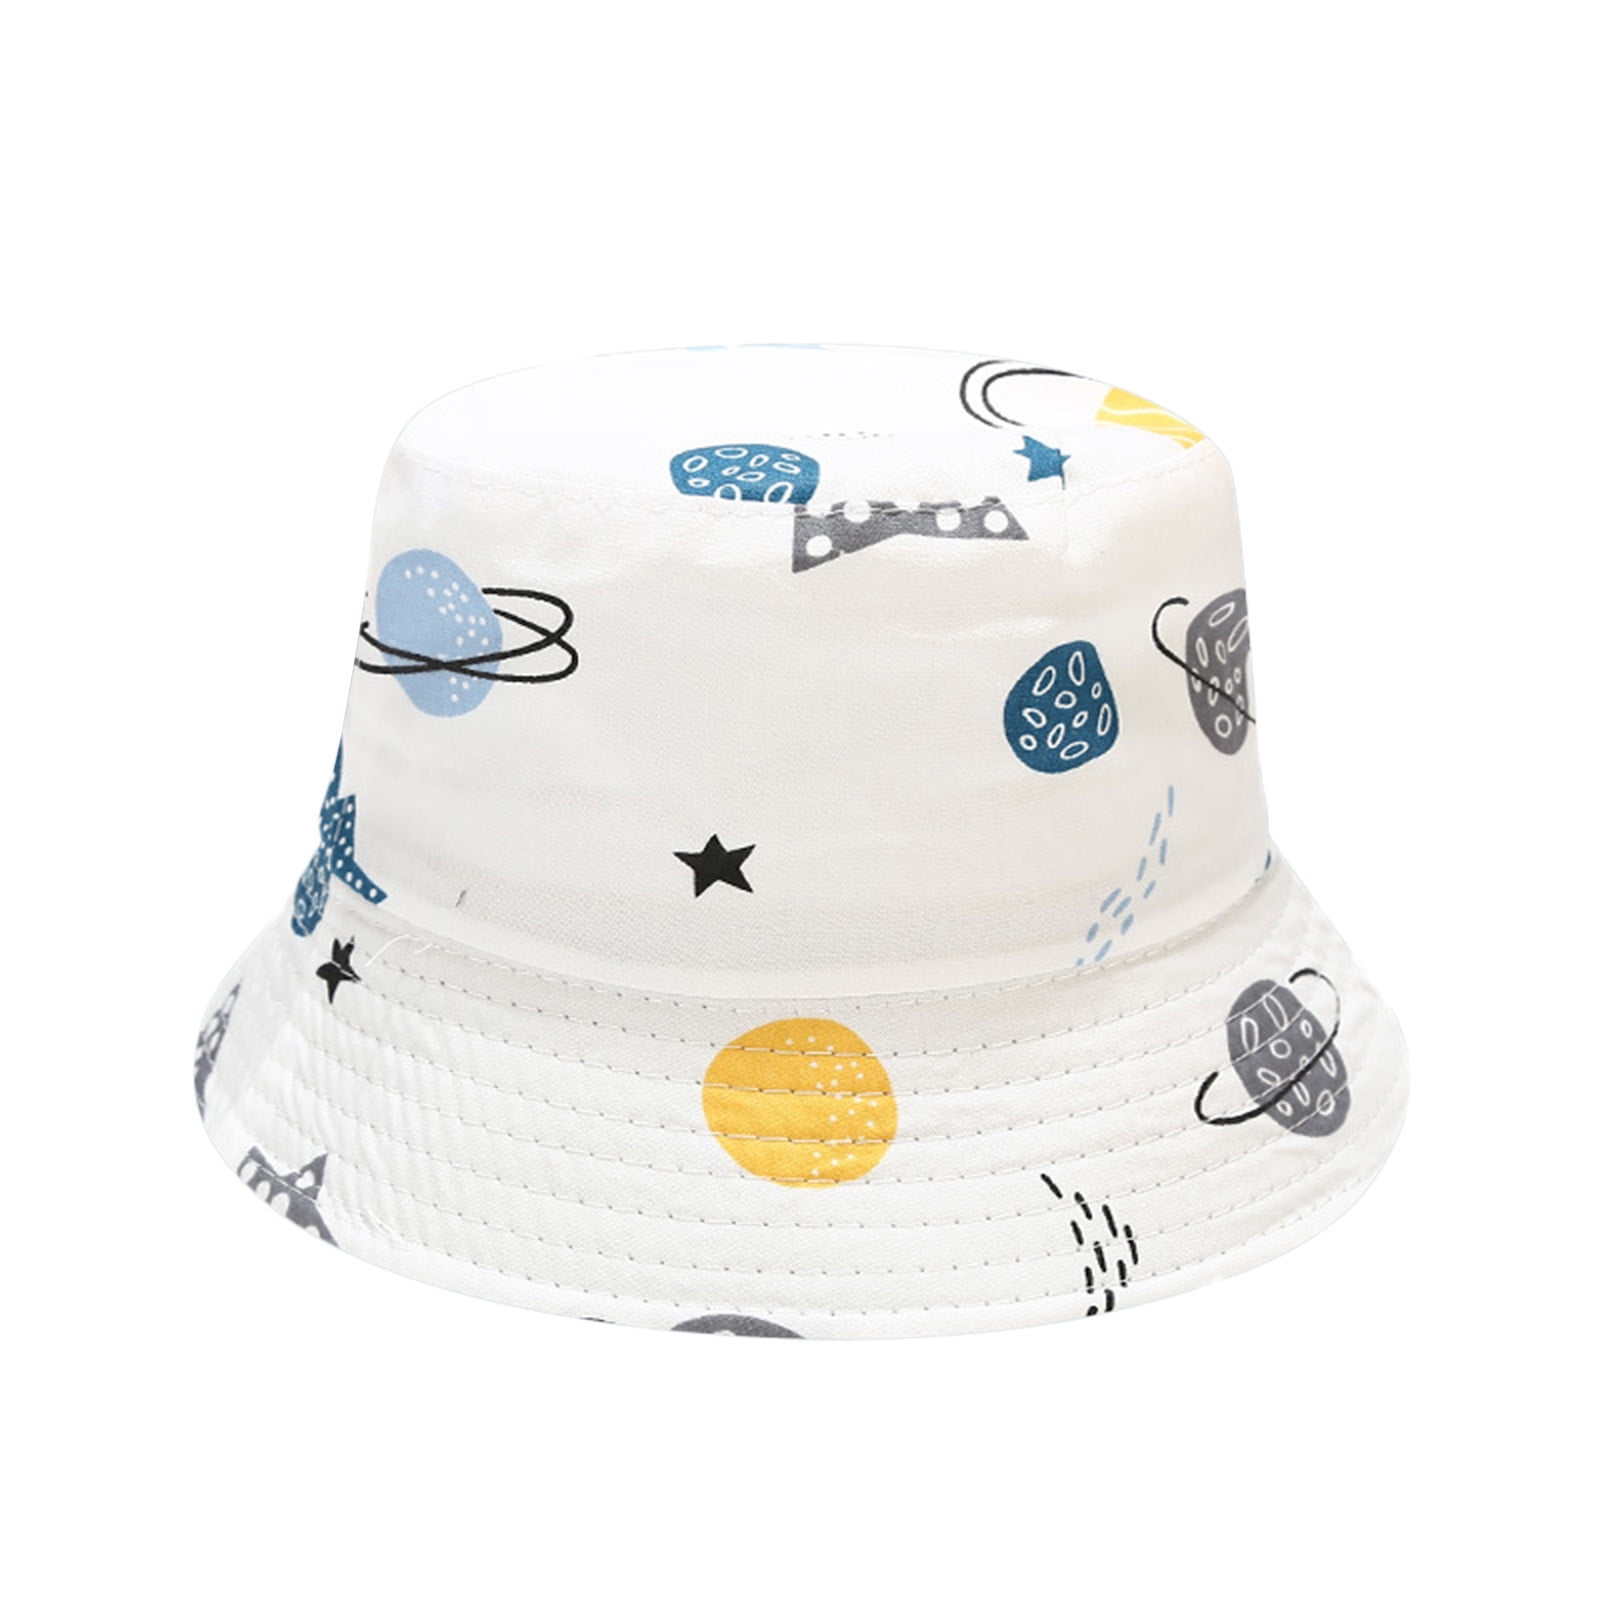 Vlone Sun Hat Bacon Bucket Cap Uv Sun Protection Fishermans Hat Foldable Lightweight Breathable Outdoor Travel Cap Black